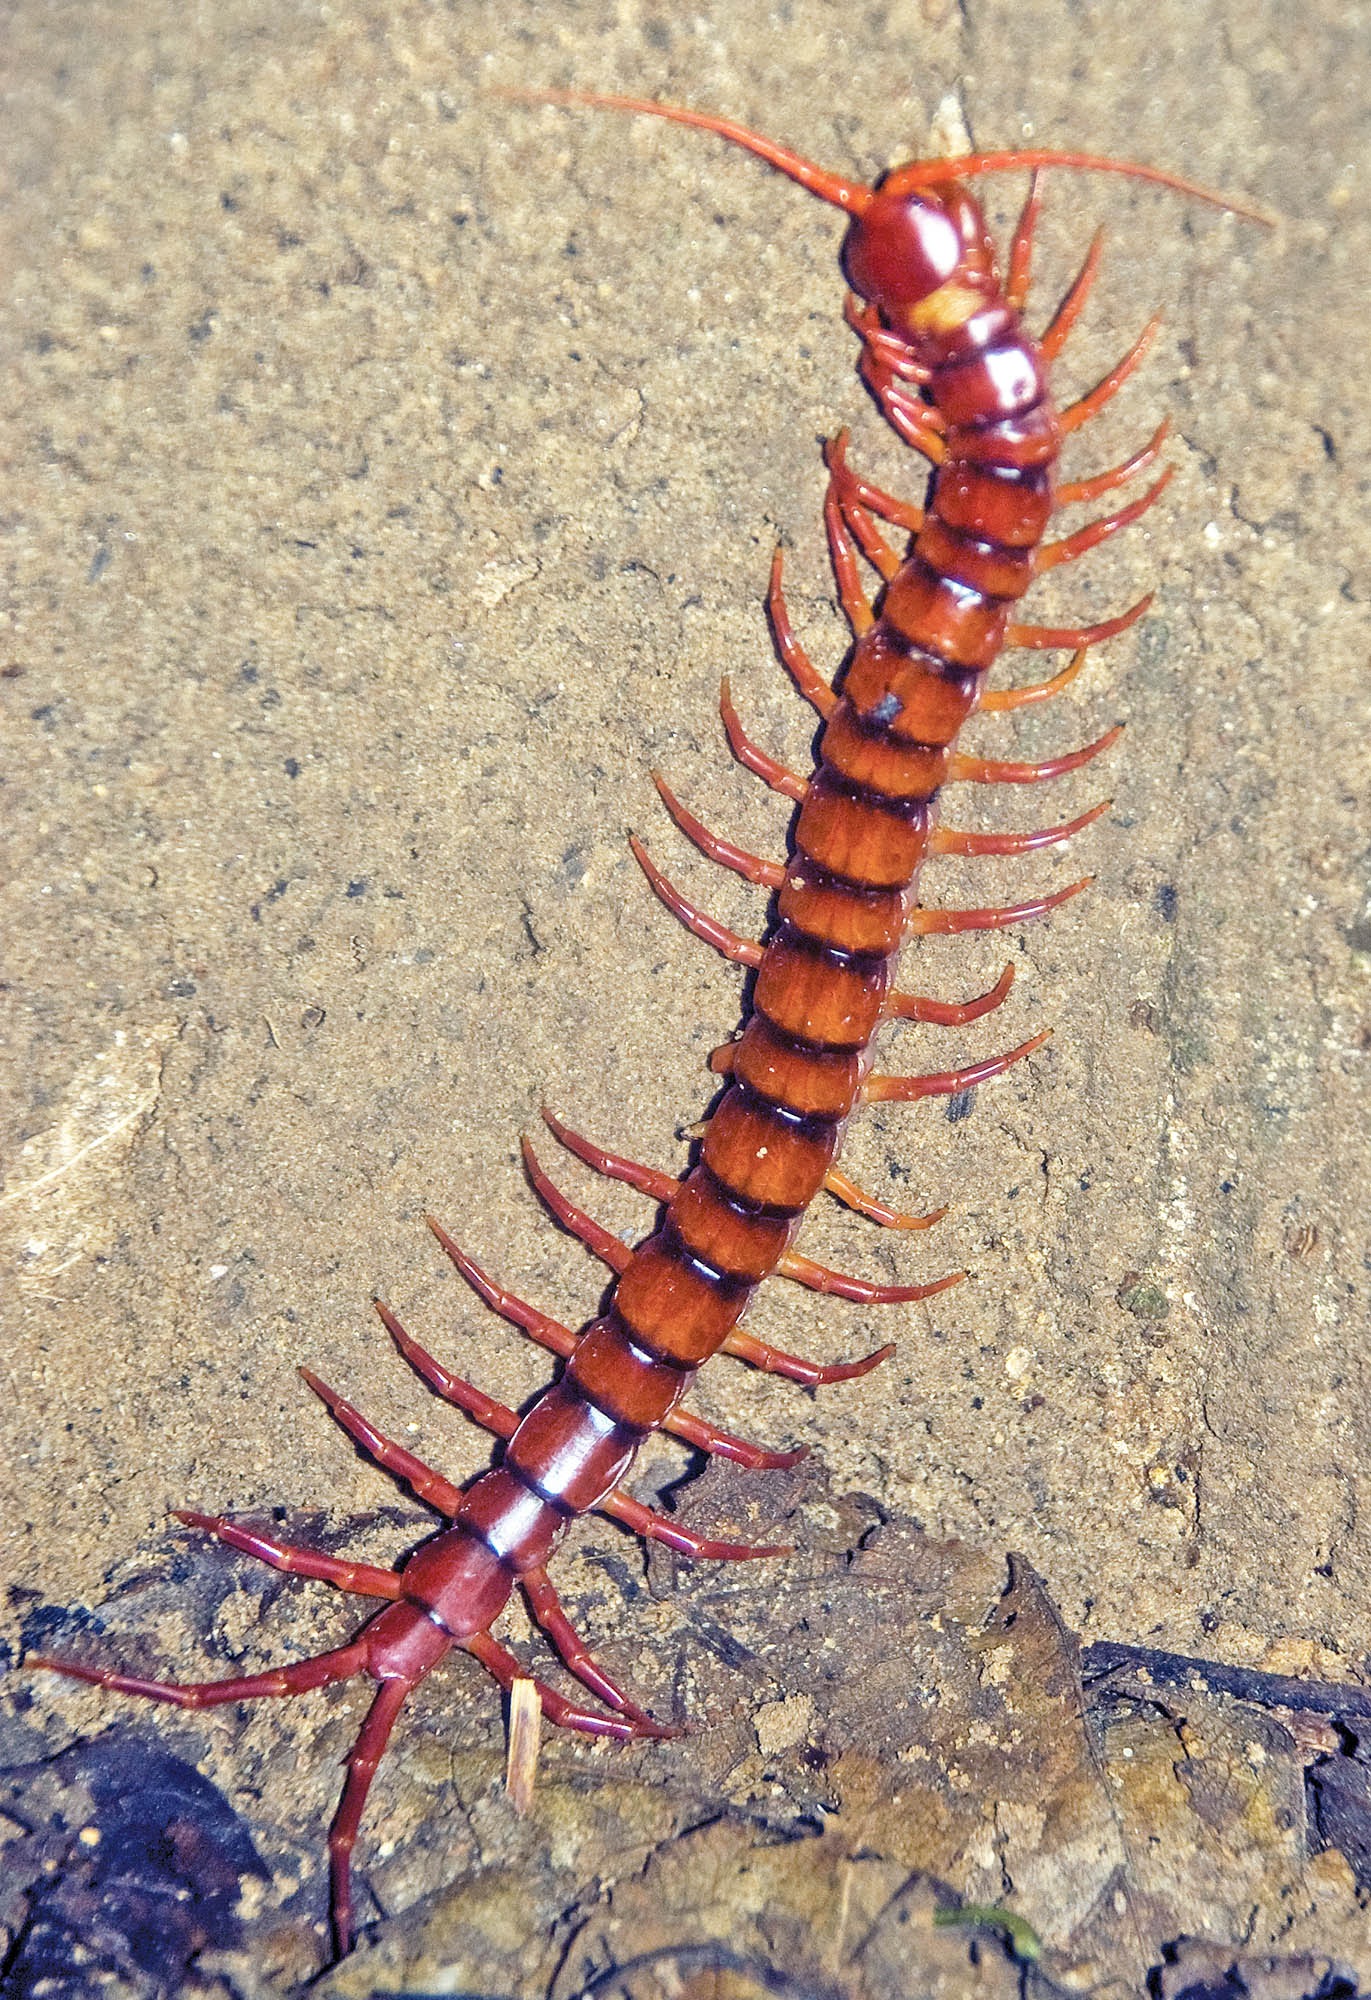 centipede-scolopendrid-taman-negara